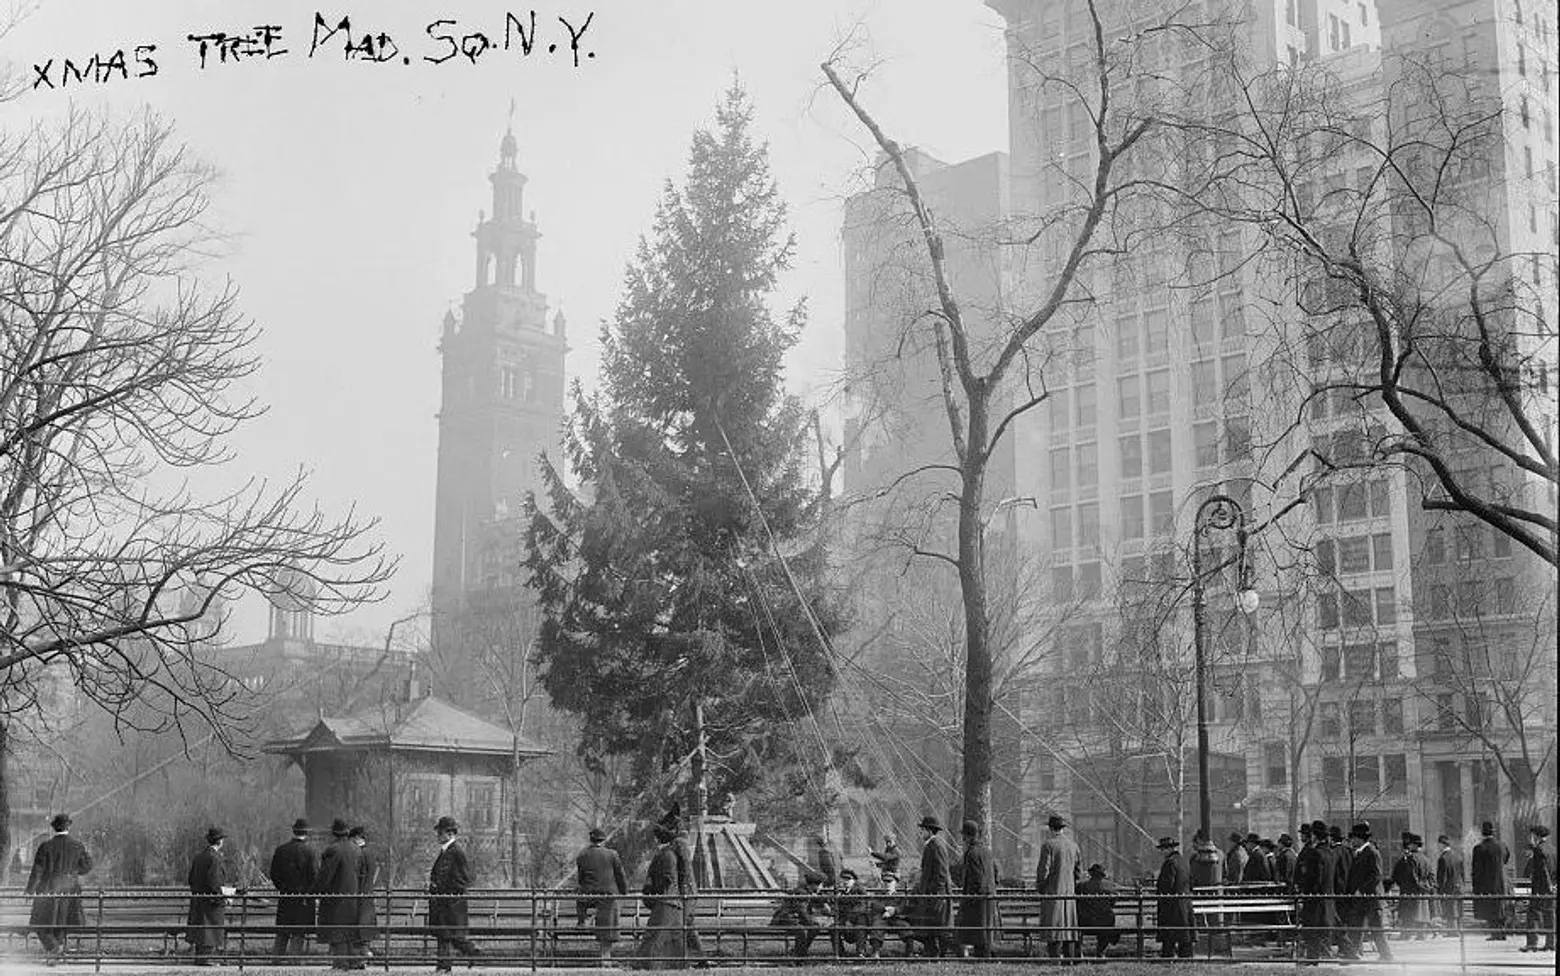 madison square park, christmas tree, public christmas tree, christmas, xmas, holiday, history